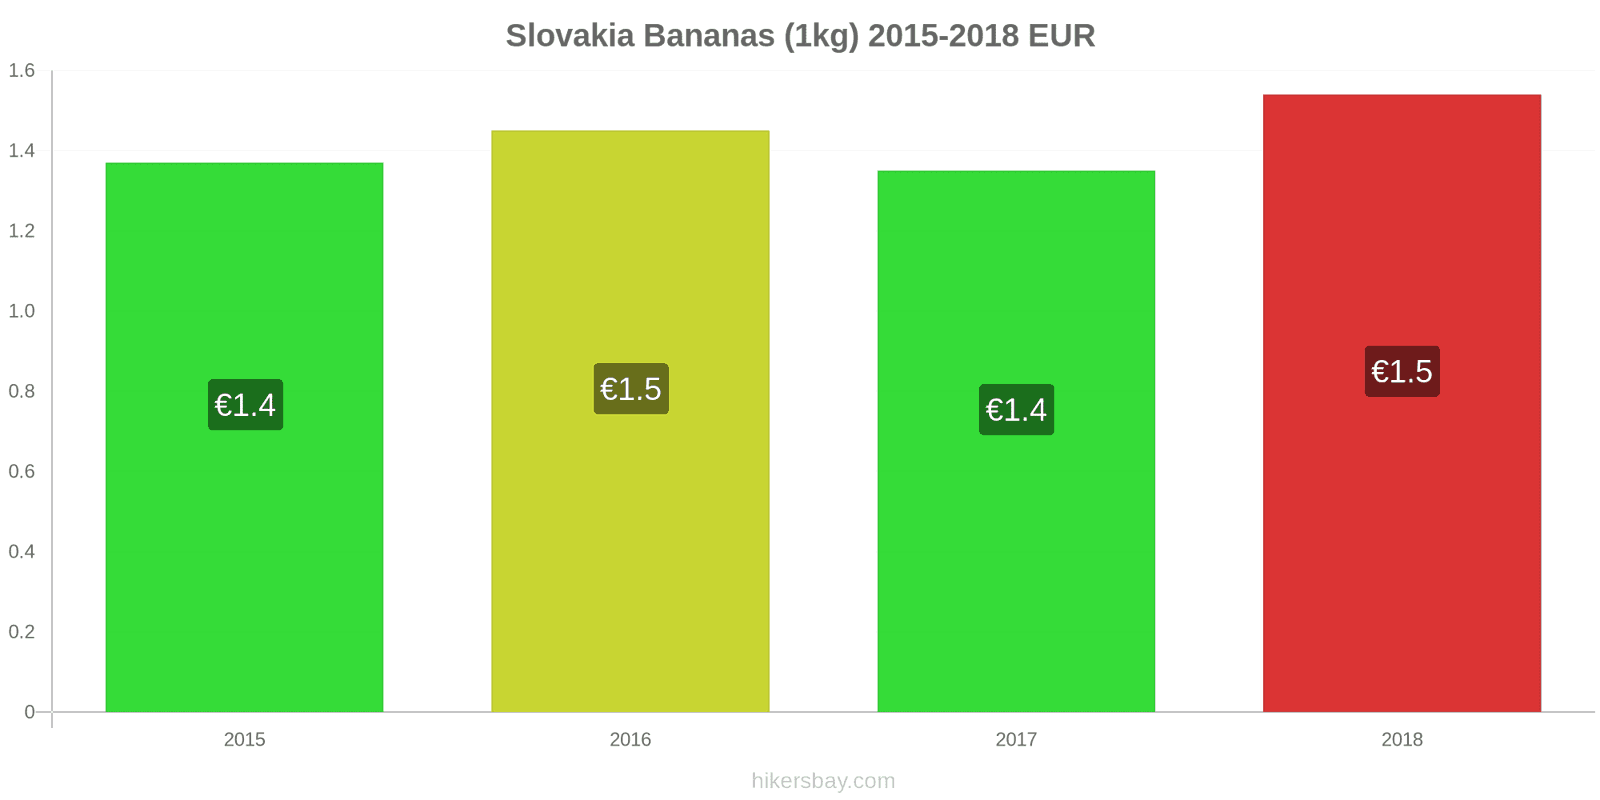 Slovakia price changes Bananas (1kg) hikersbay.com